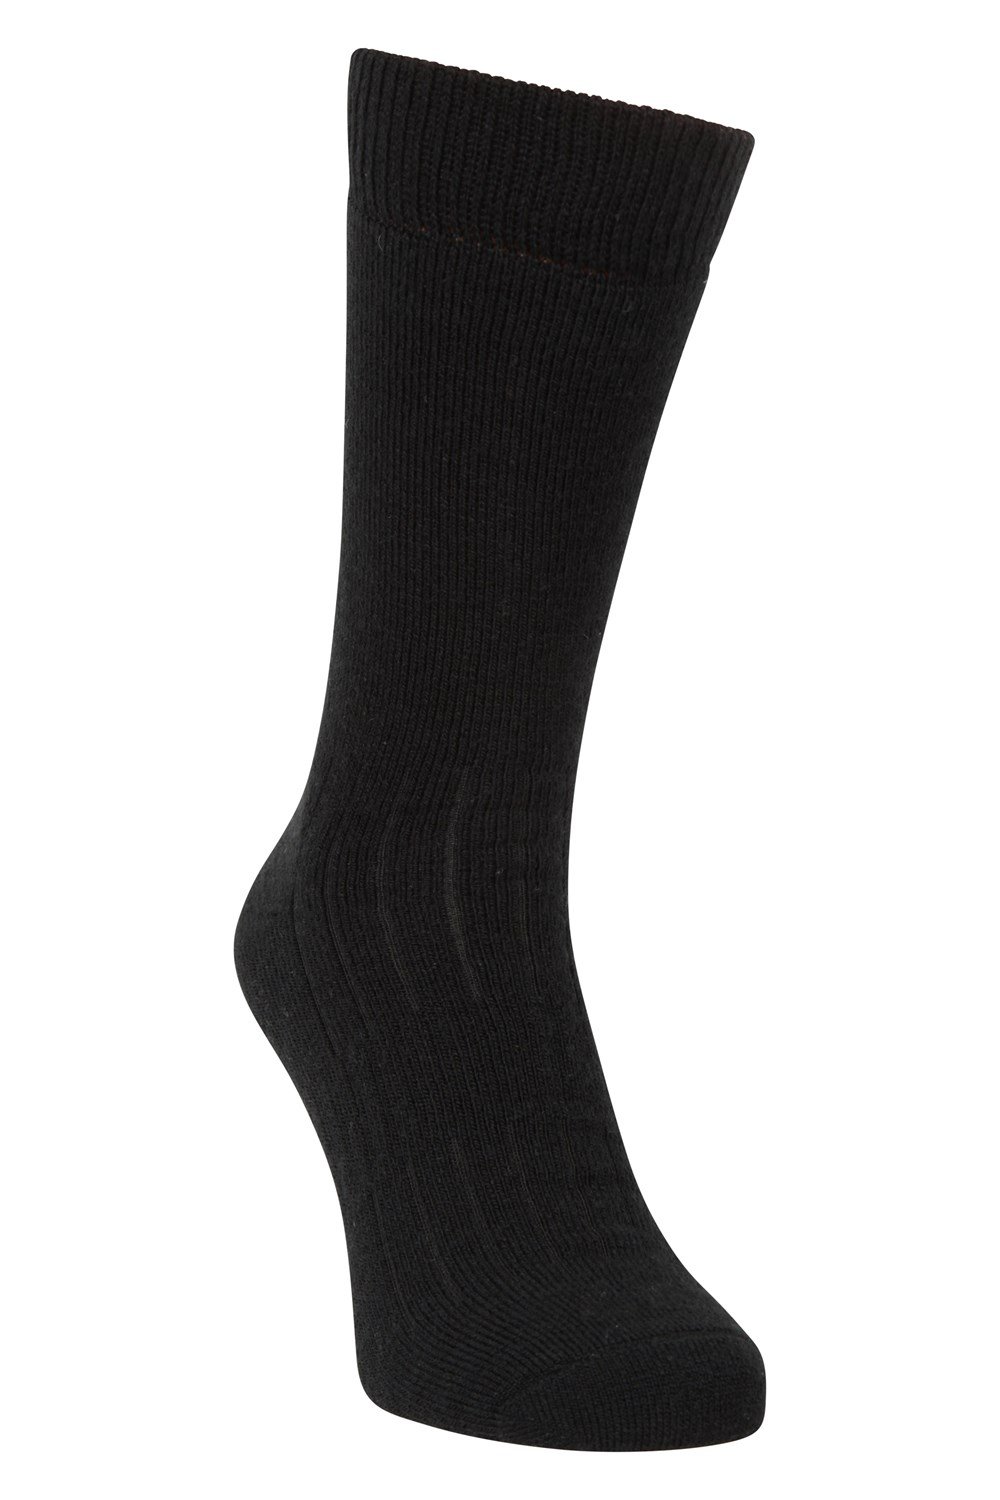 Mountain Warehouse Merino Explorer Men's Thermal Socks Smooth Toe Seam ...